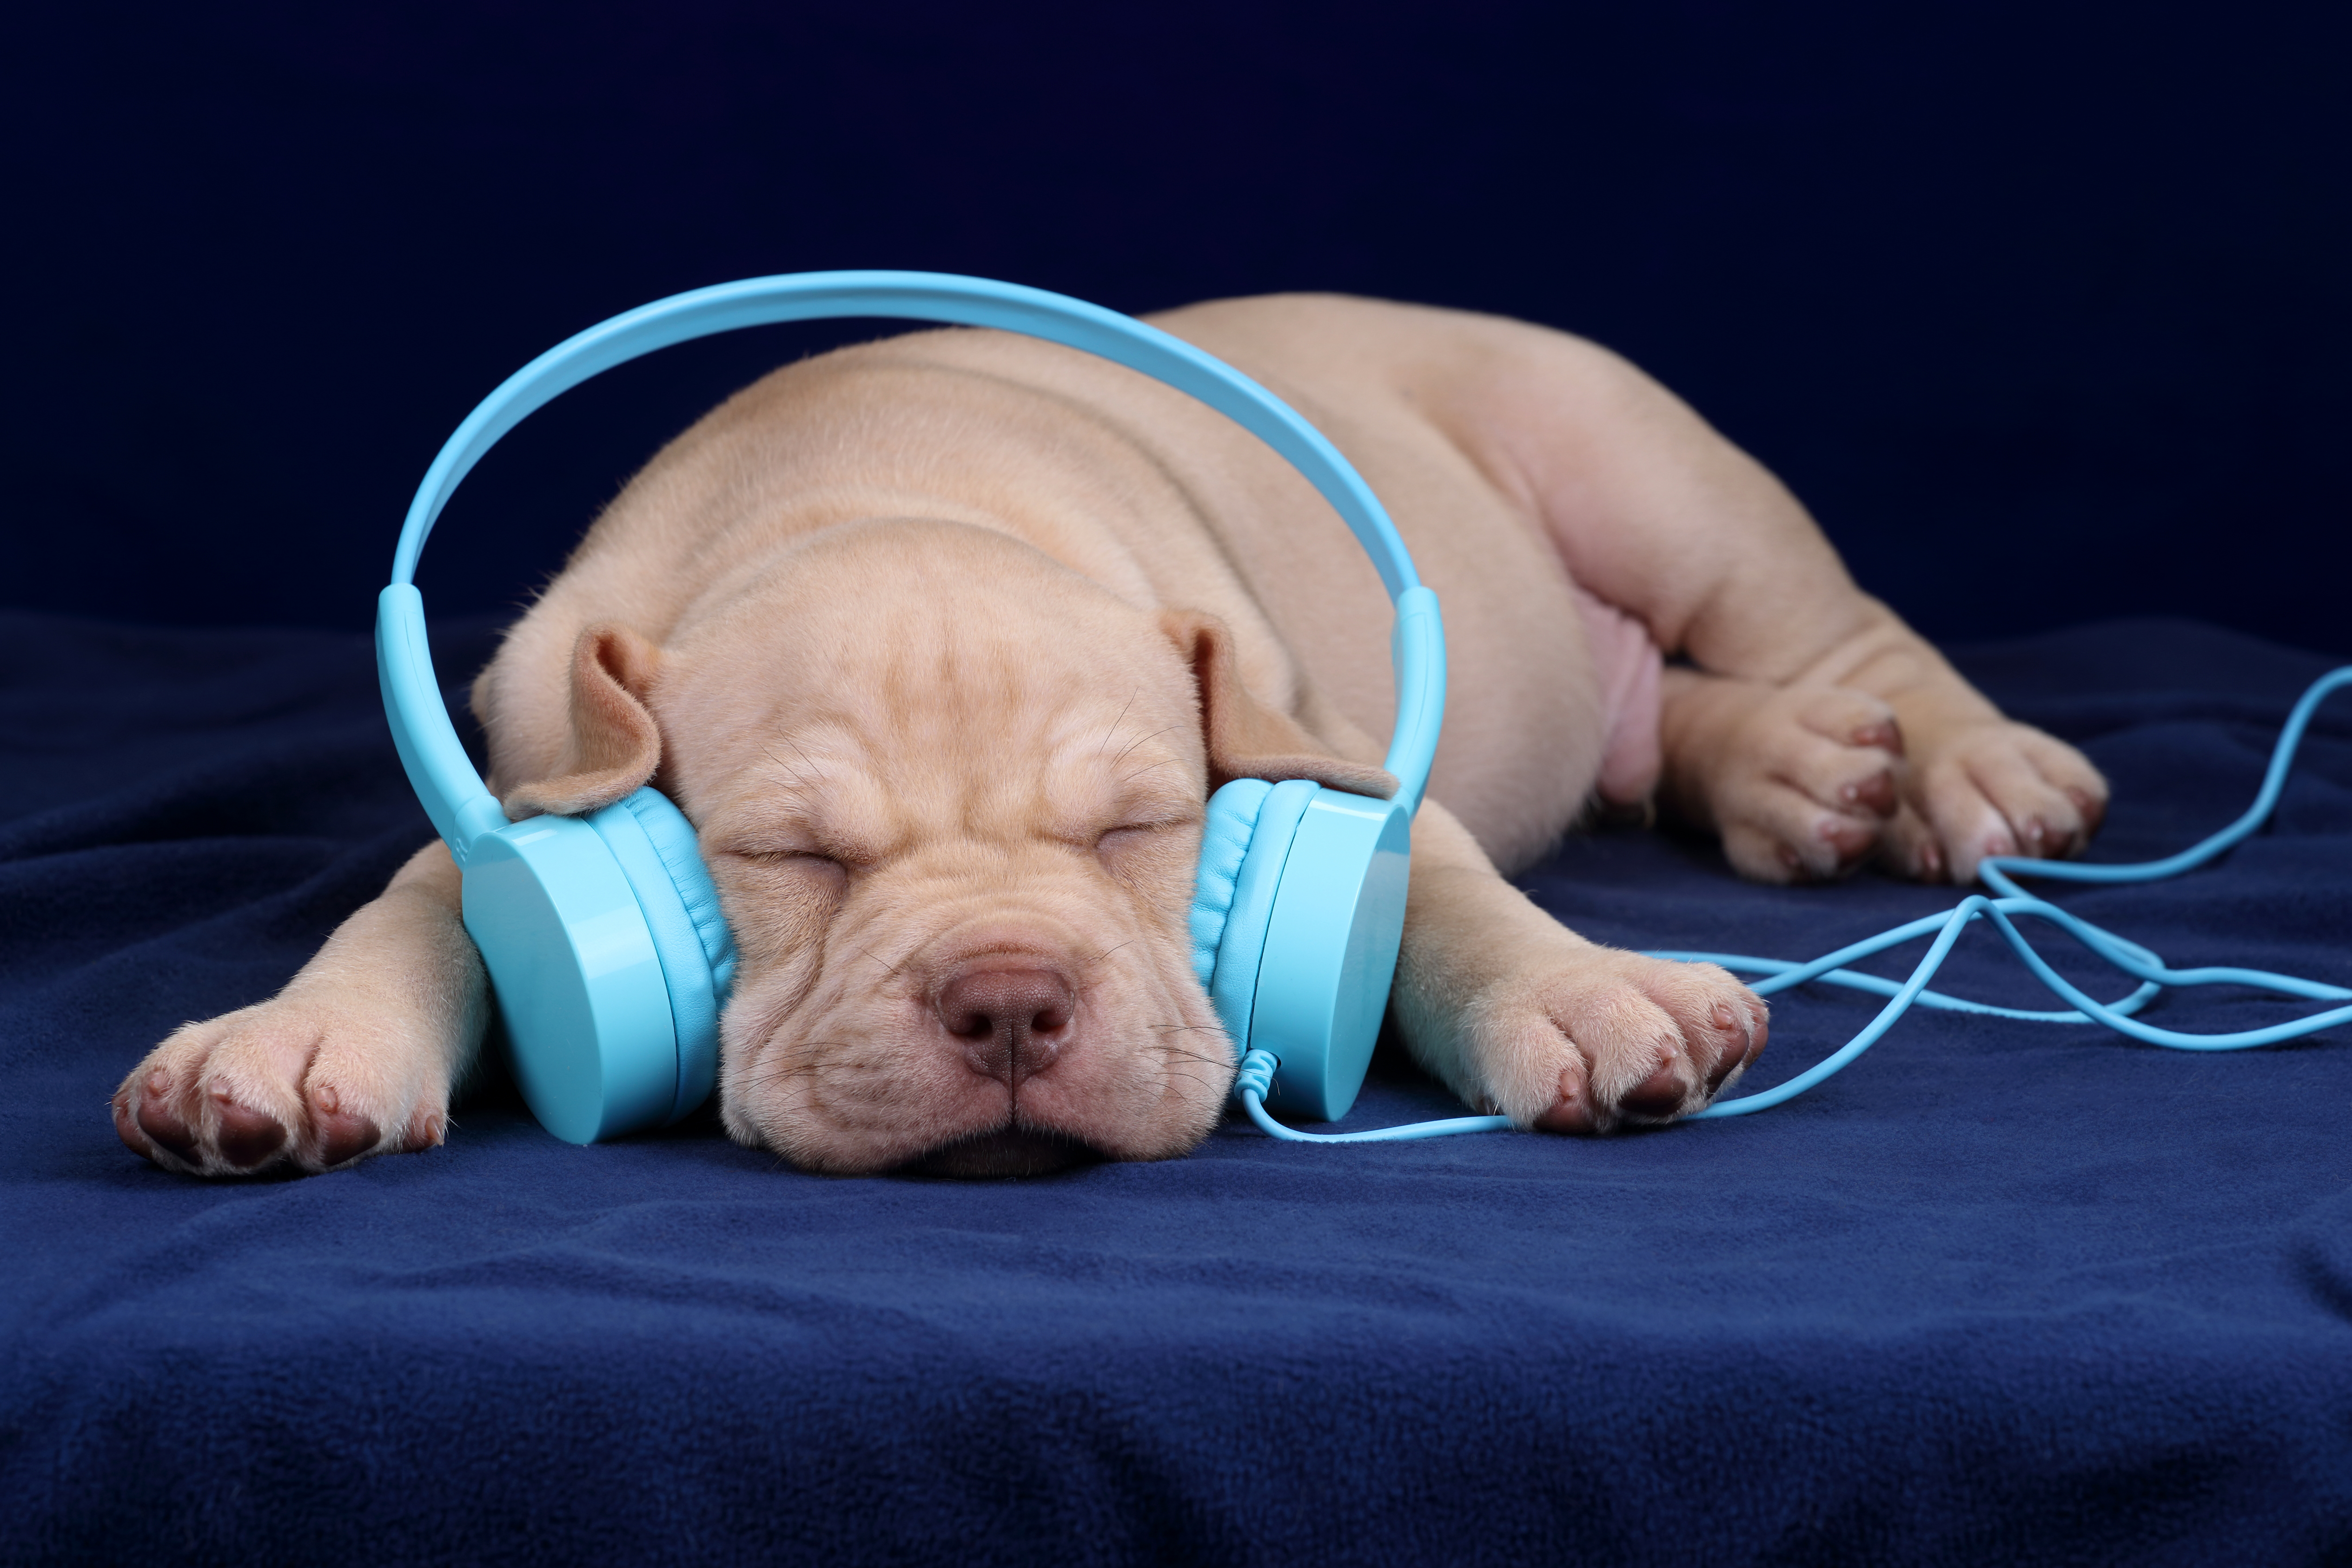 music to help puppy sleep